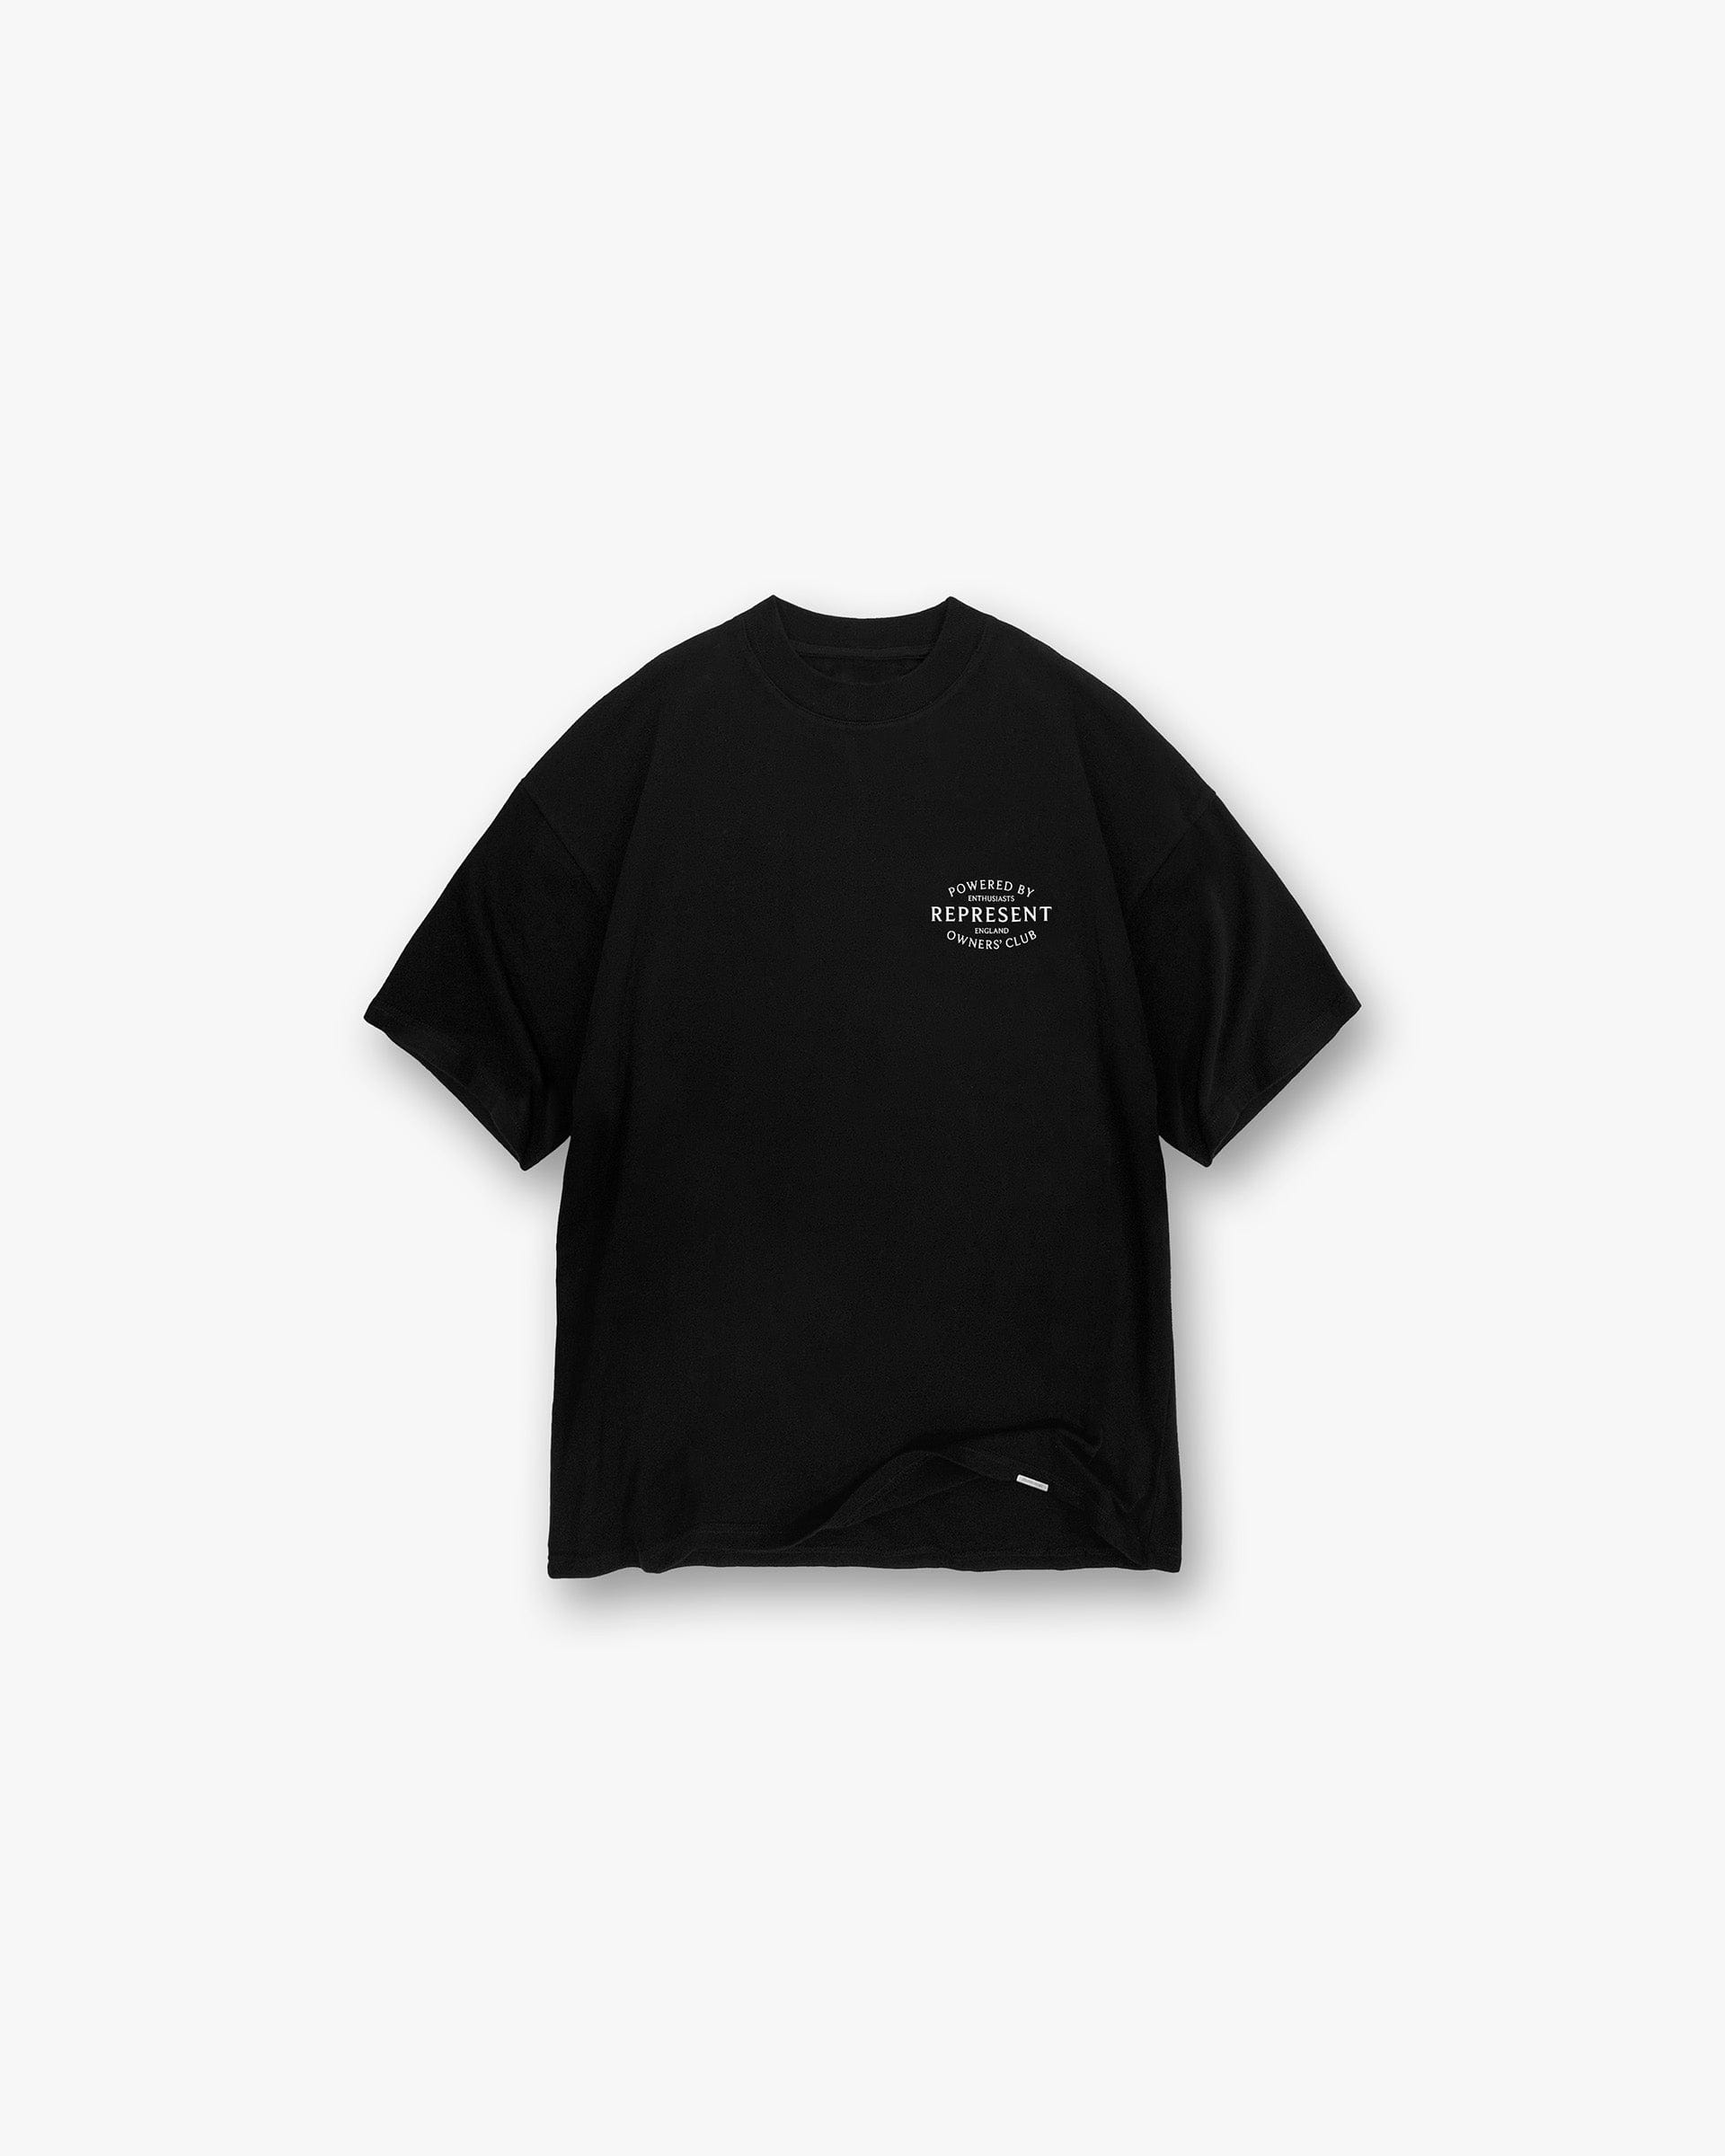 Represent Owners Club Stamp T-Shirt - Jet Black